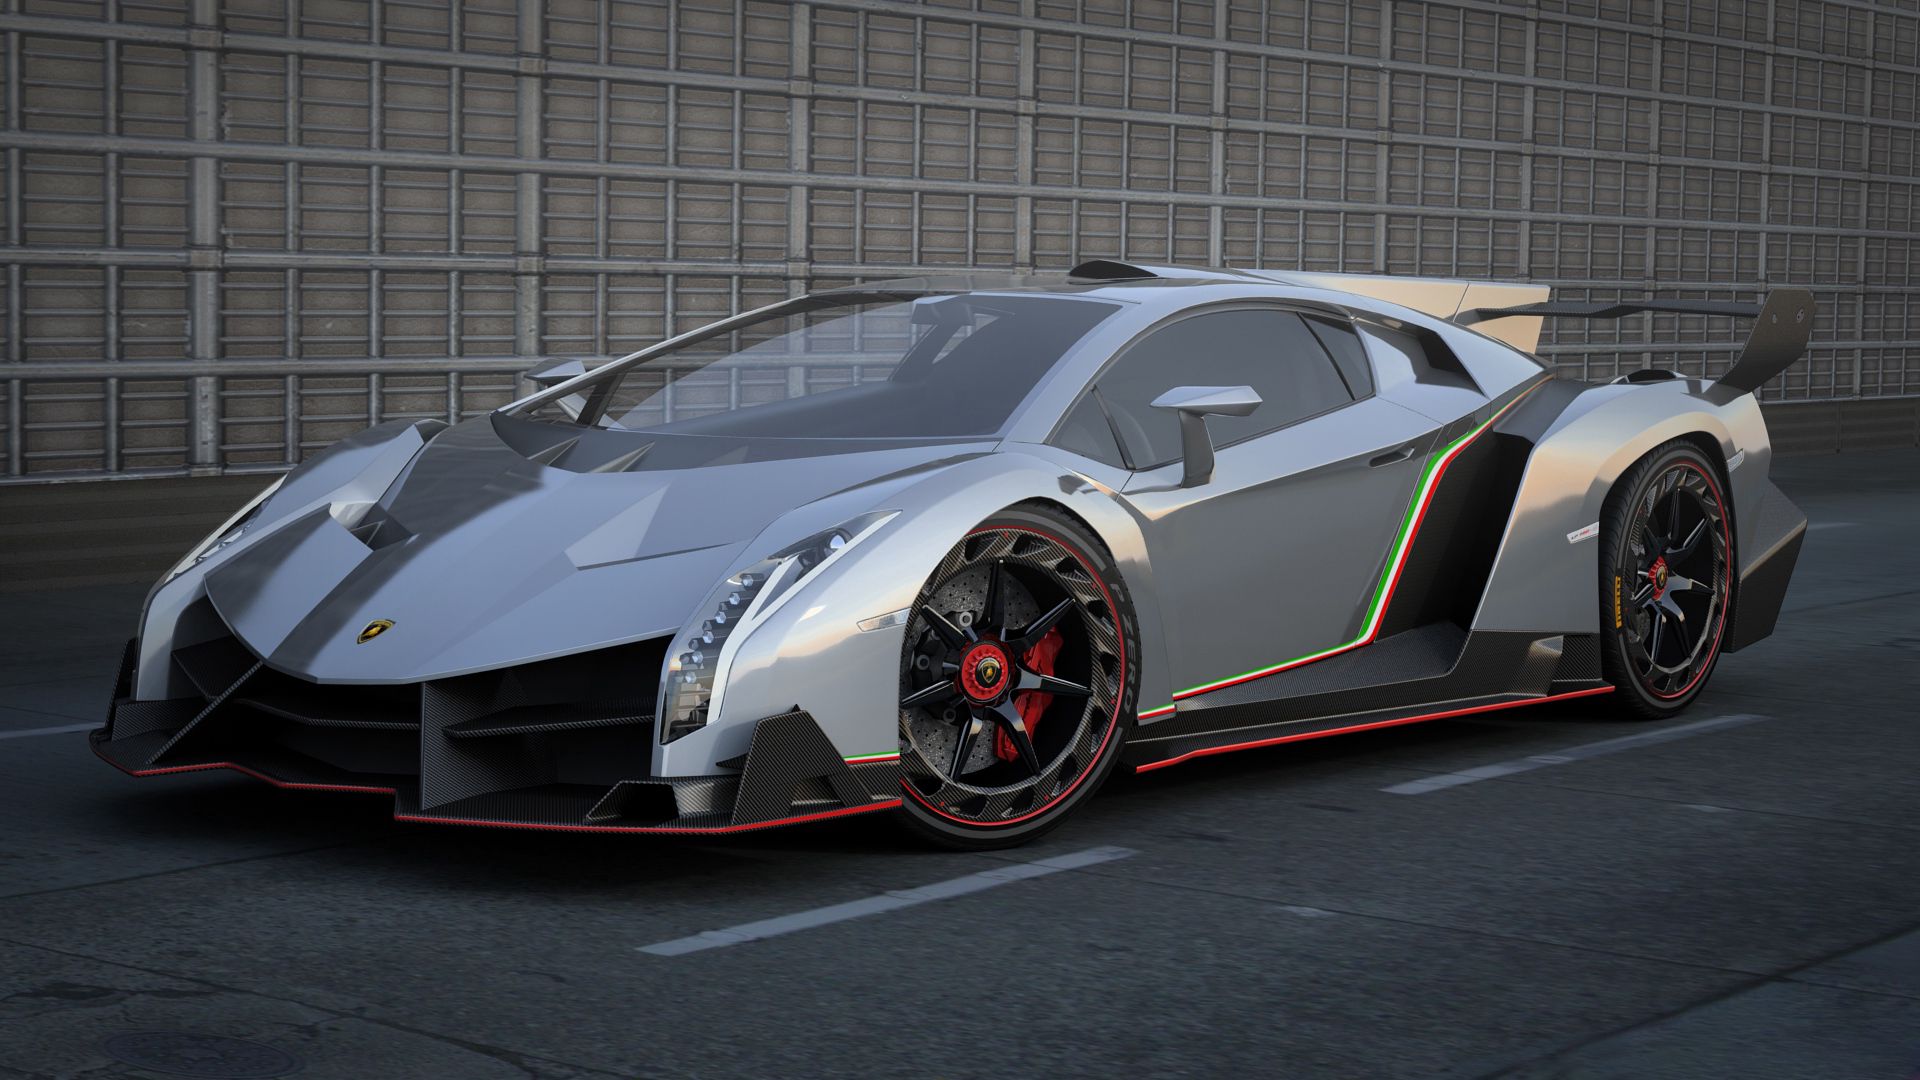 Télécharger des fonds d'écran Lamborghini Veneno HD